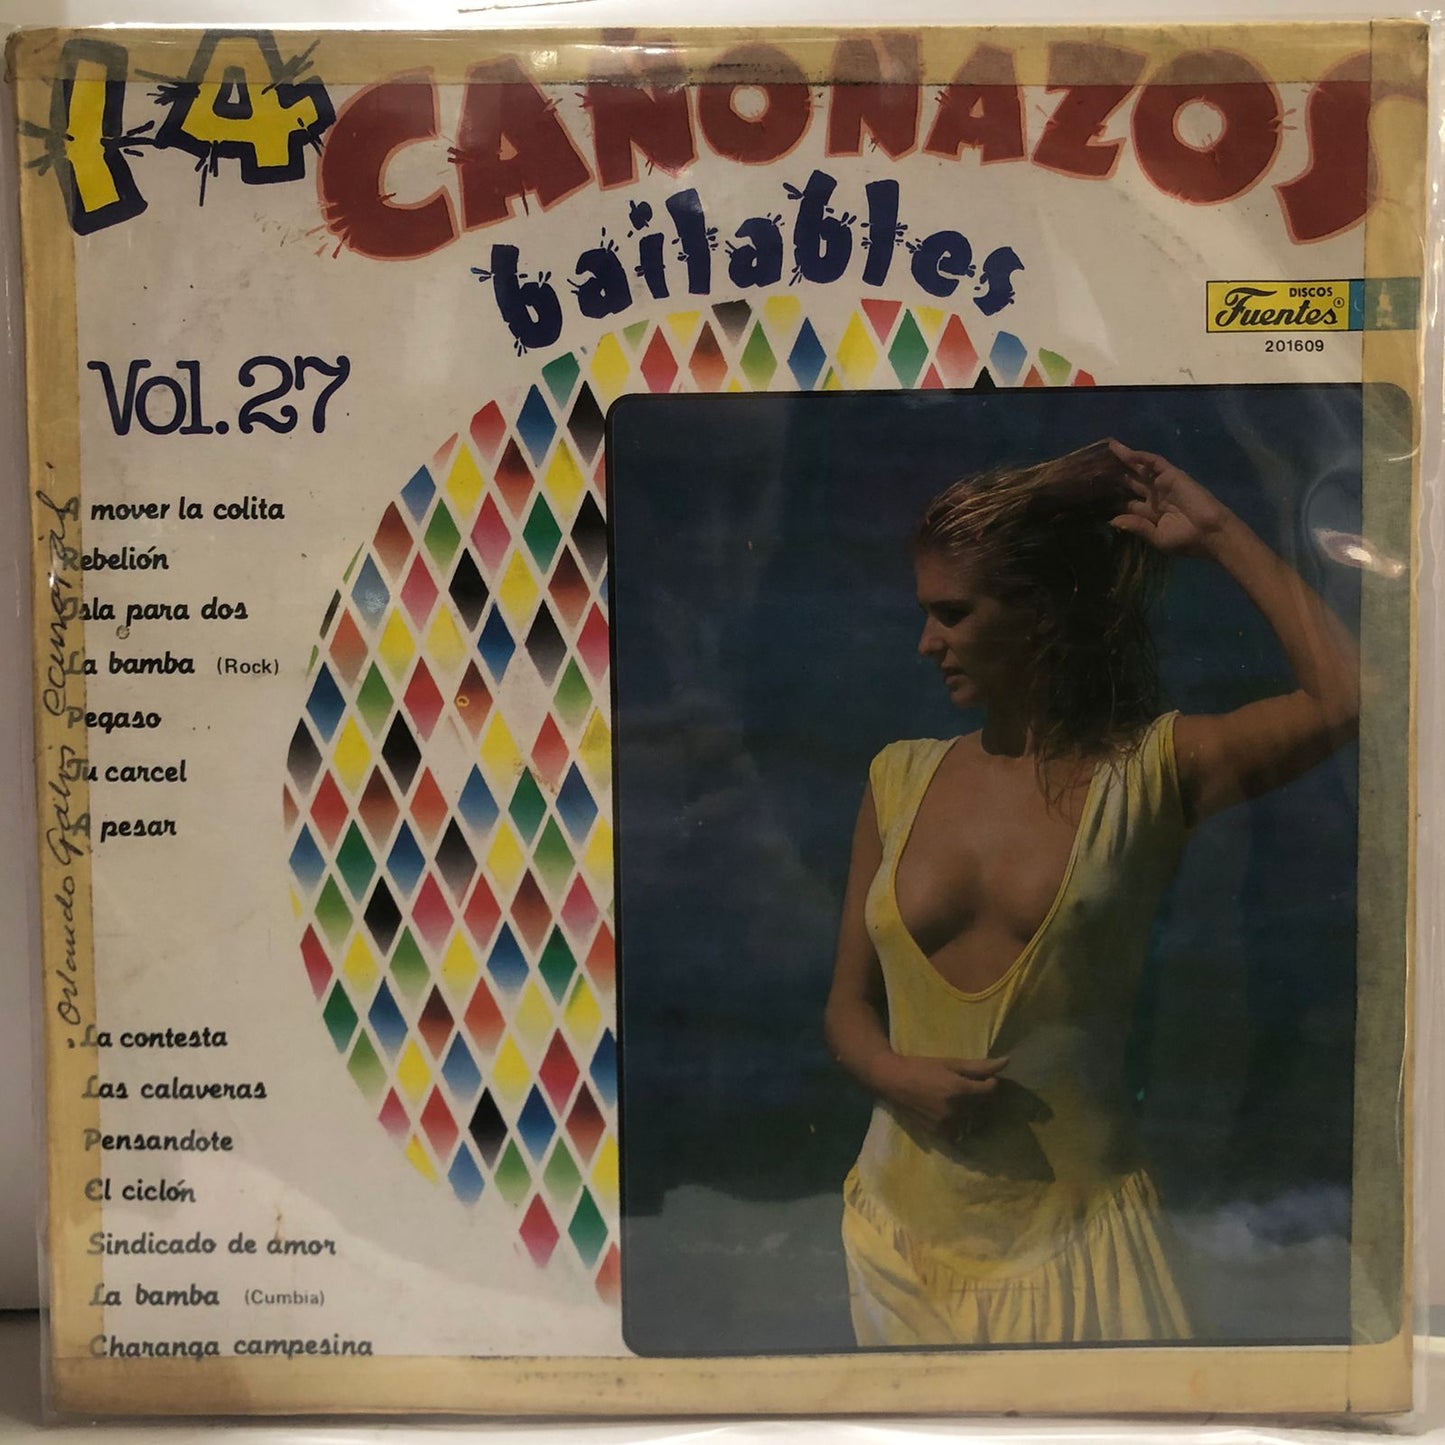 14 CAÑONAZOS BAILABLES VOL.27 LP